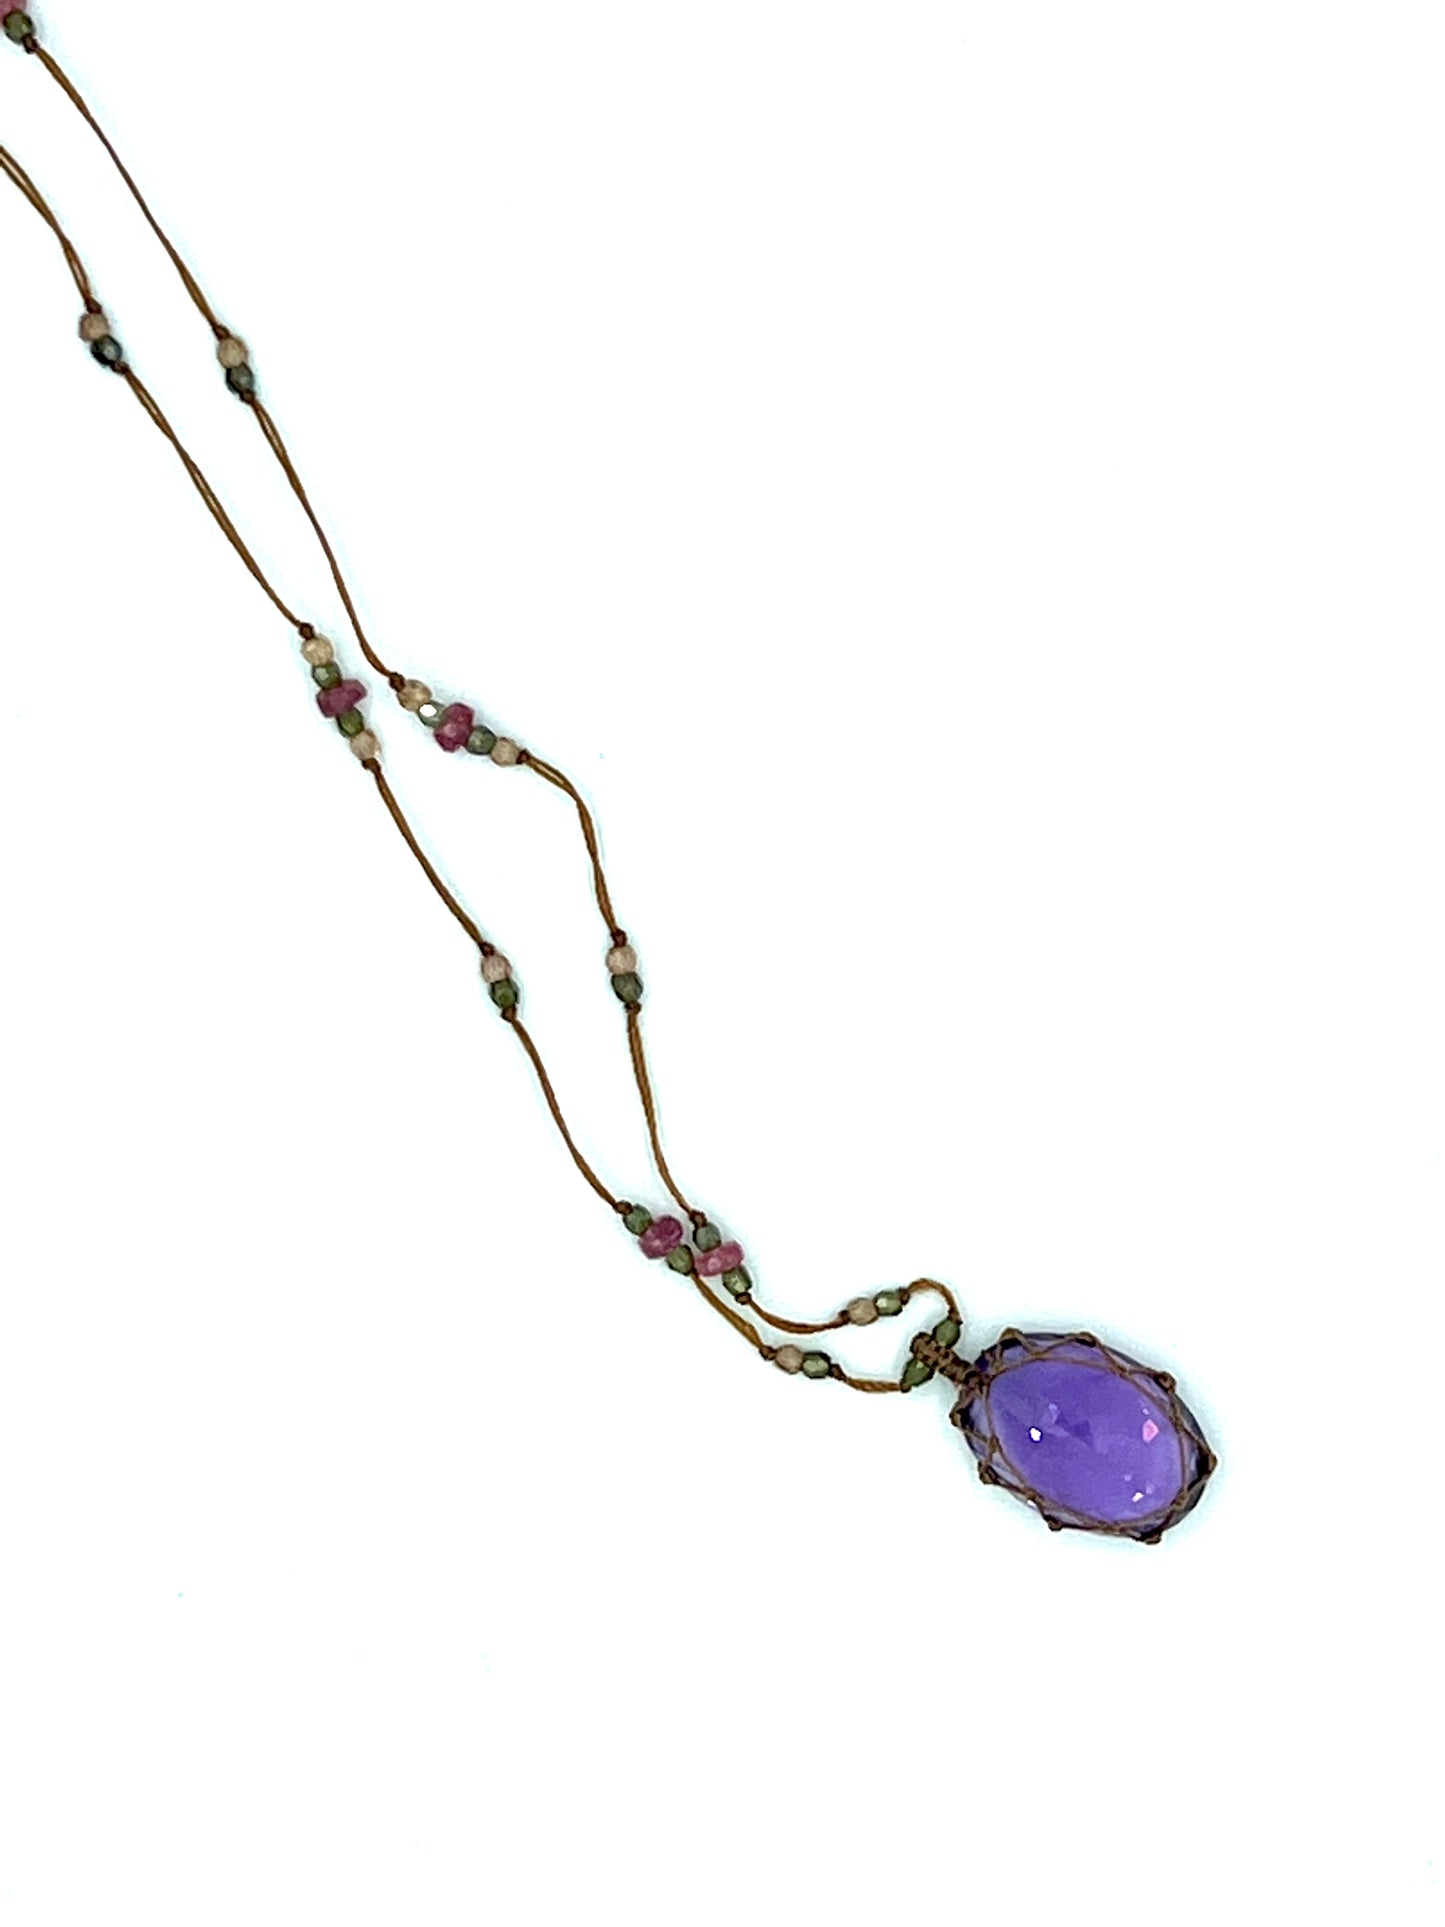 Short Tibetan Necklace - Sharing